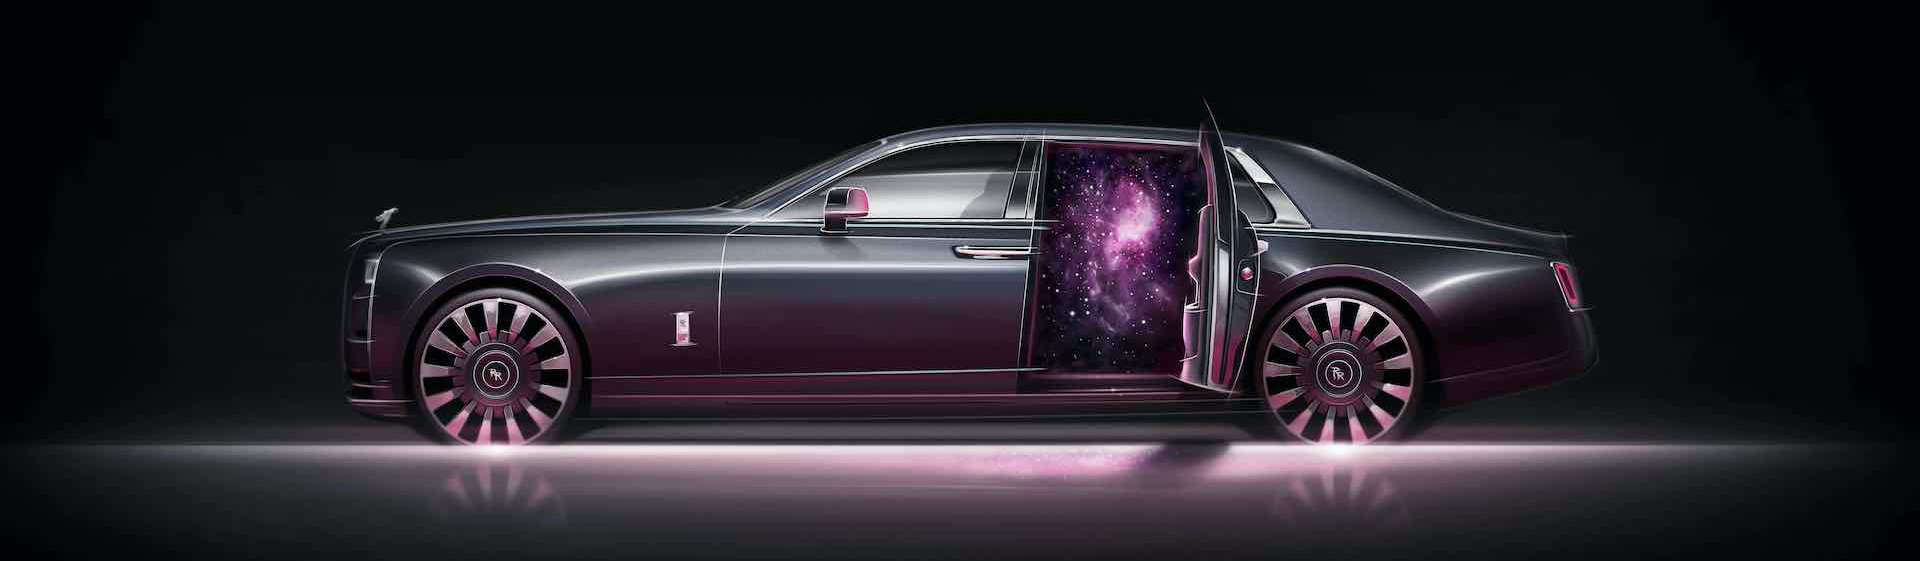 Rolls-Royce Phantom Tempus Collection Side Profile